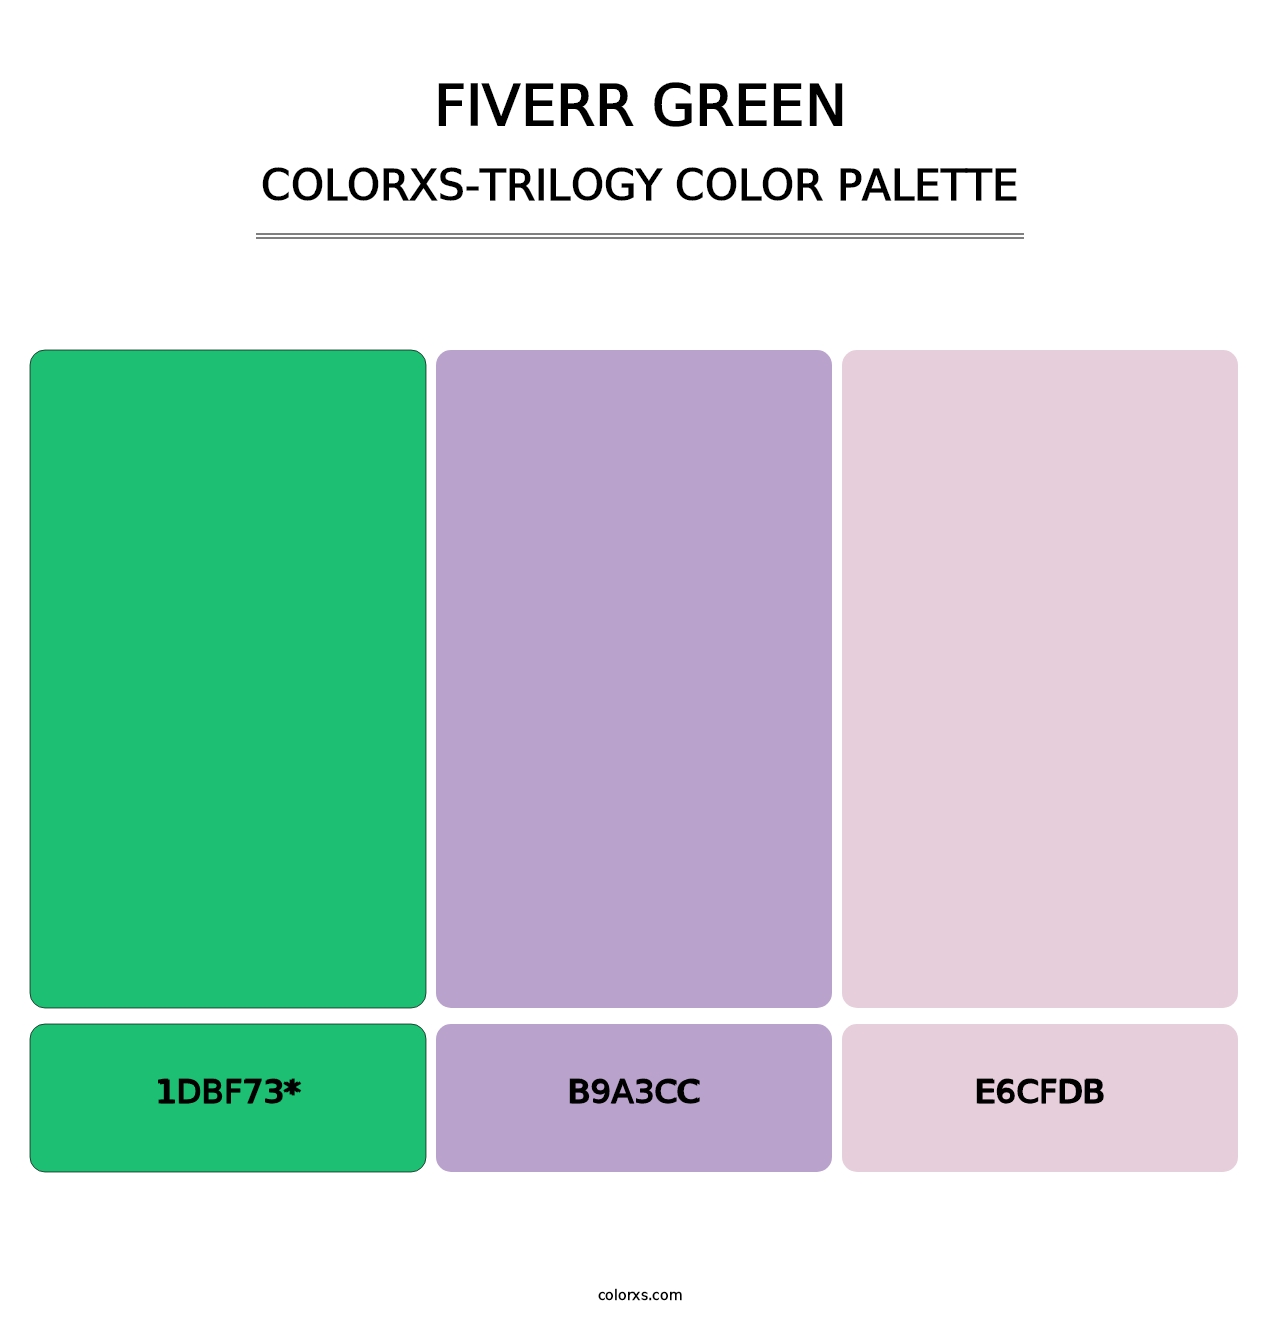 Fiverr Green - Colorxs Trilogy Palette